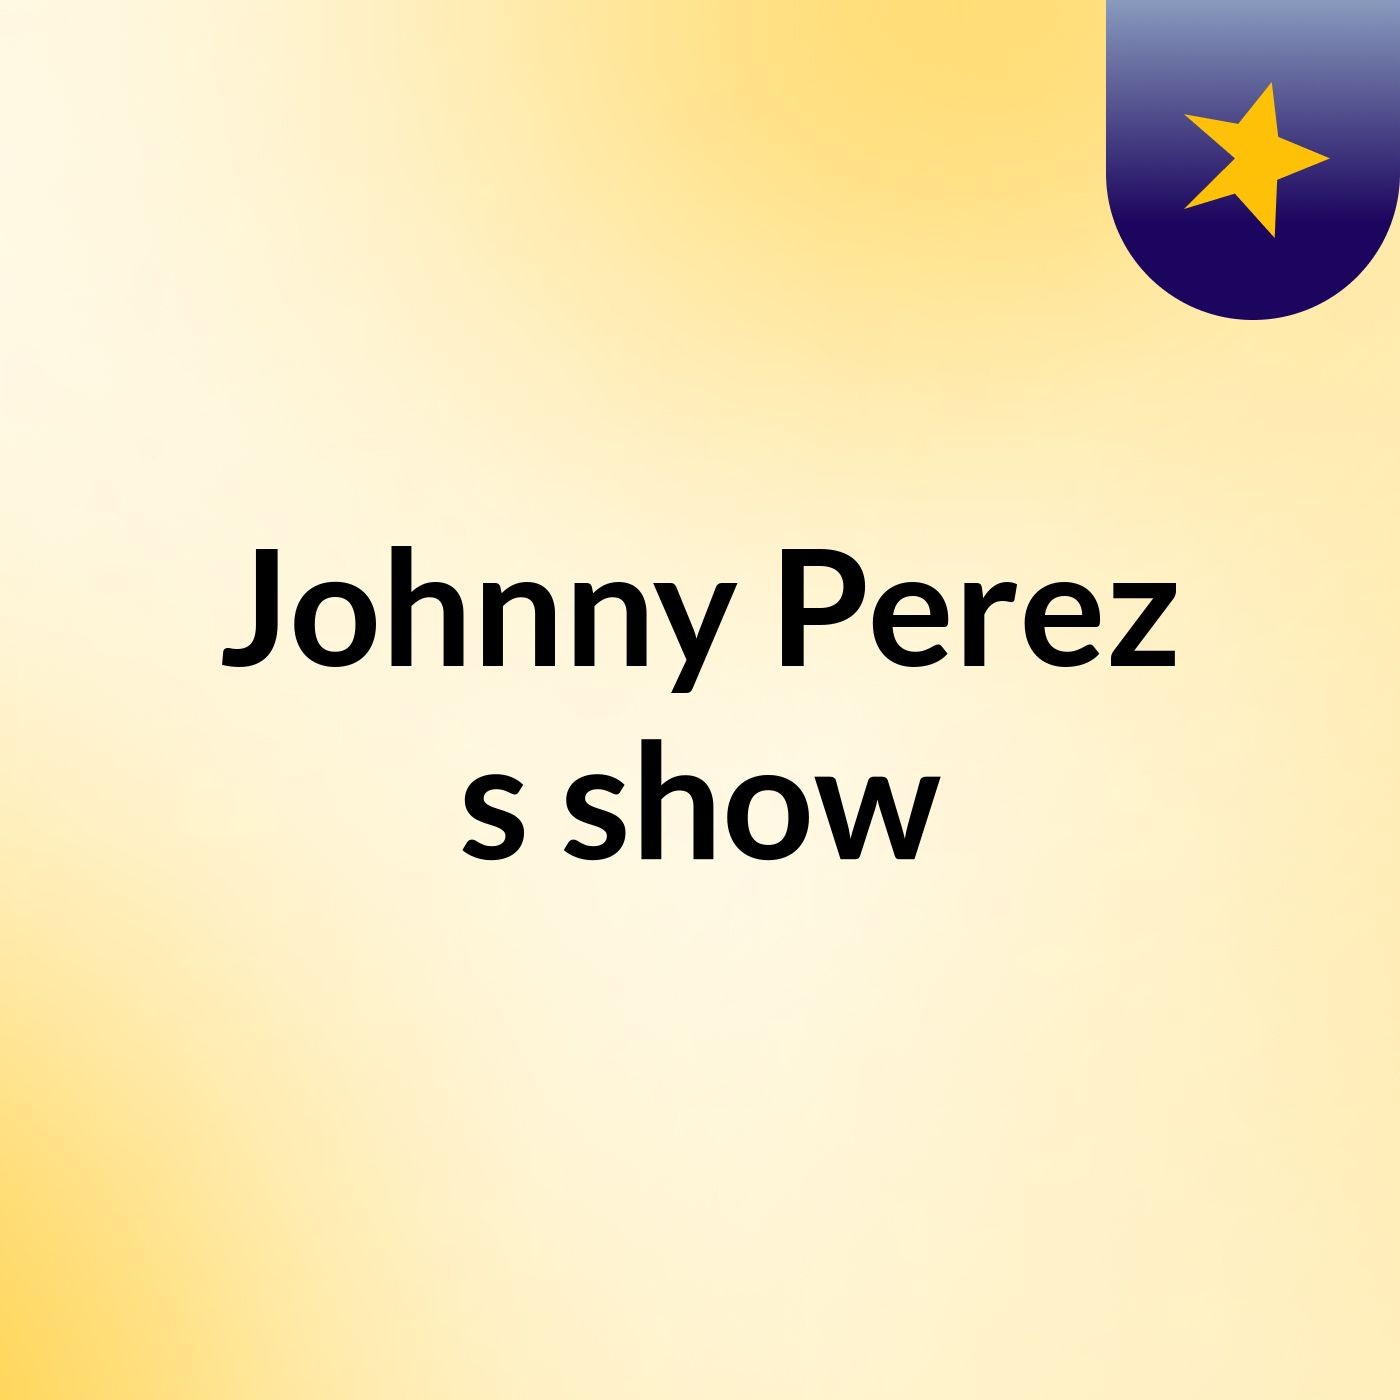 Johnny Perez's show